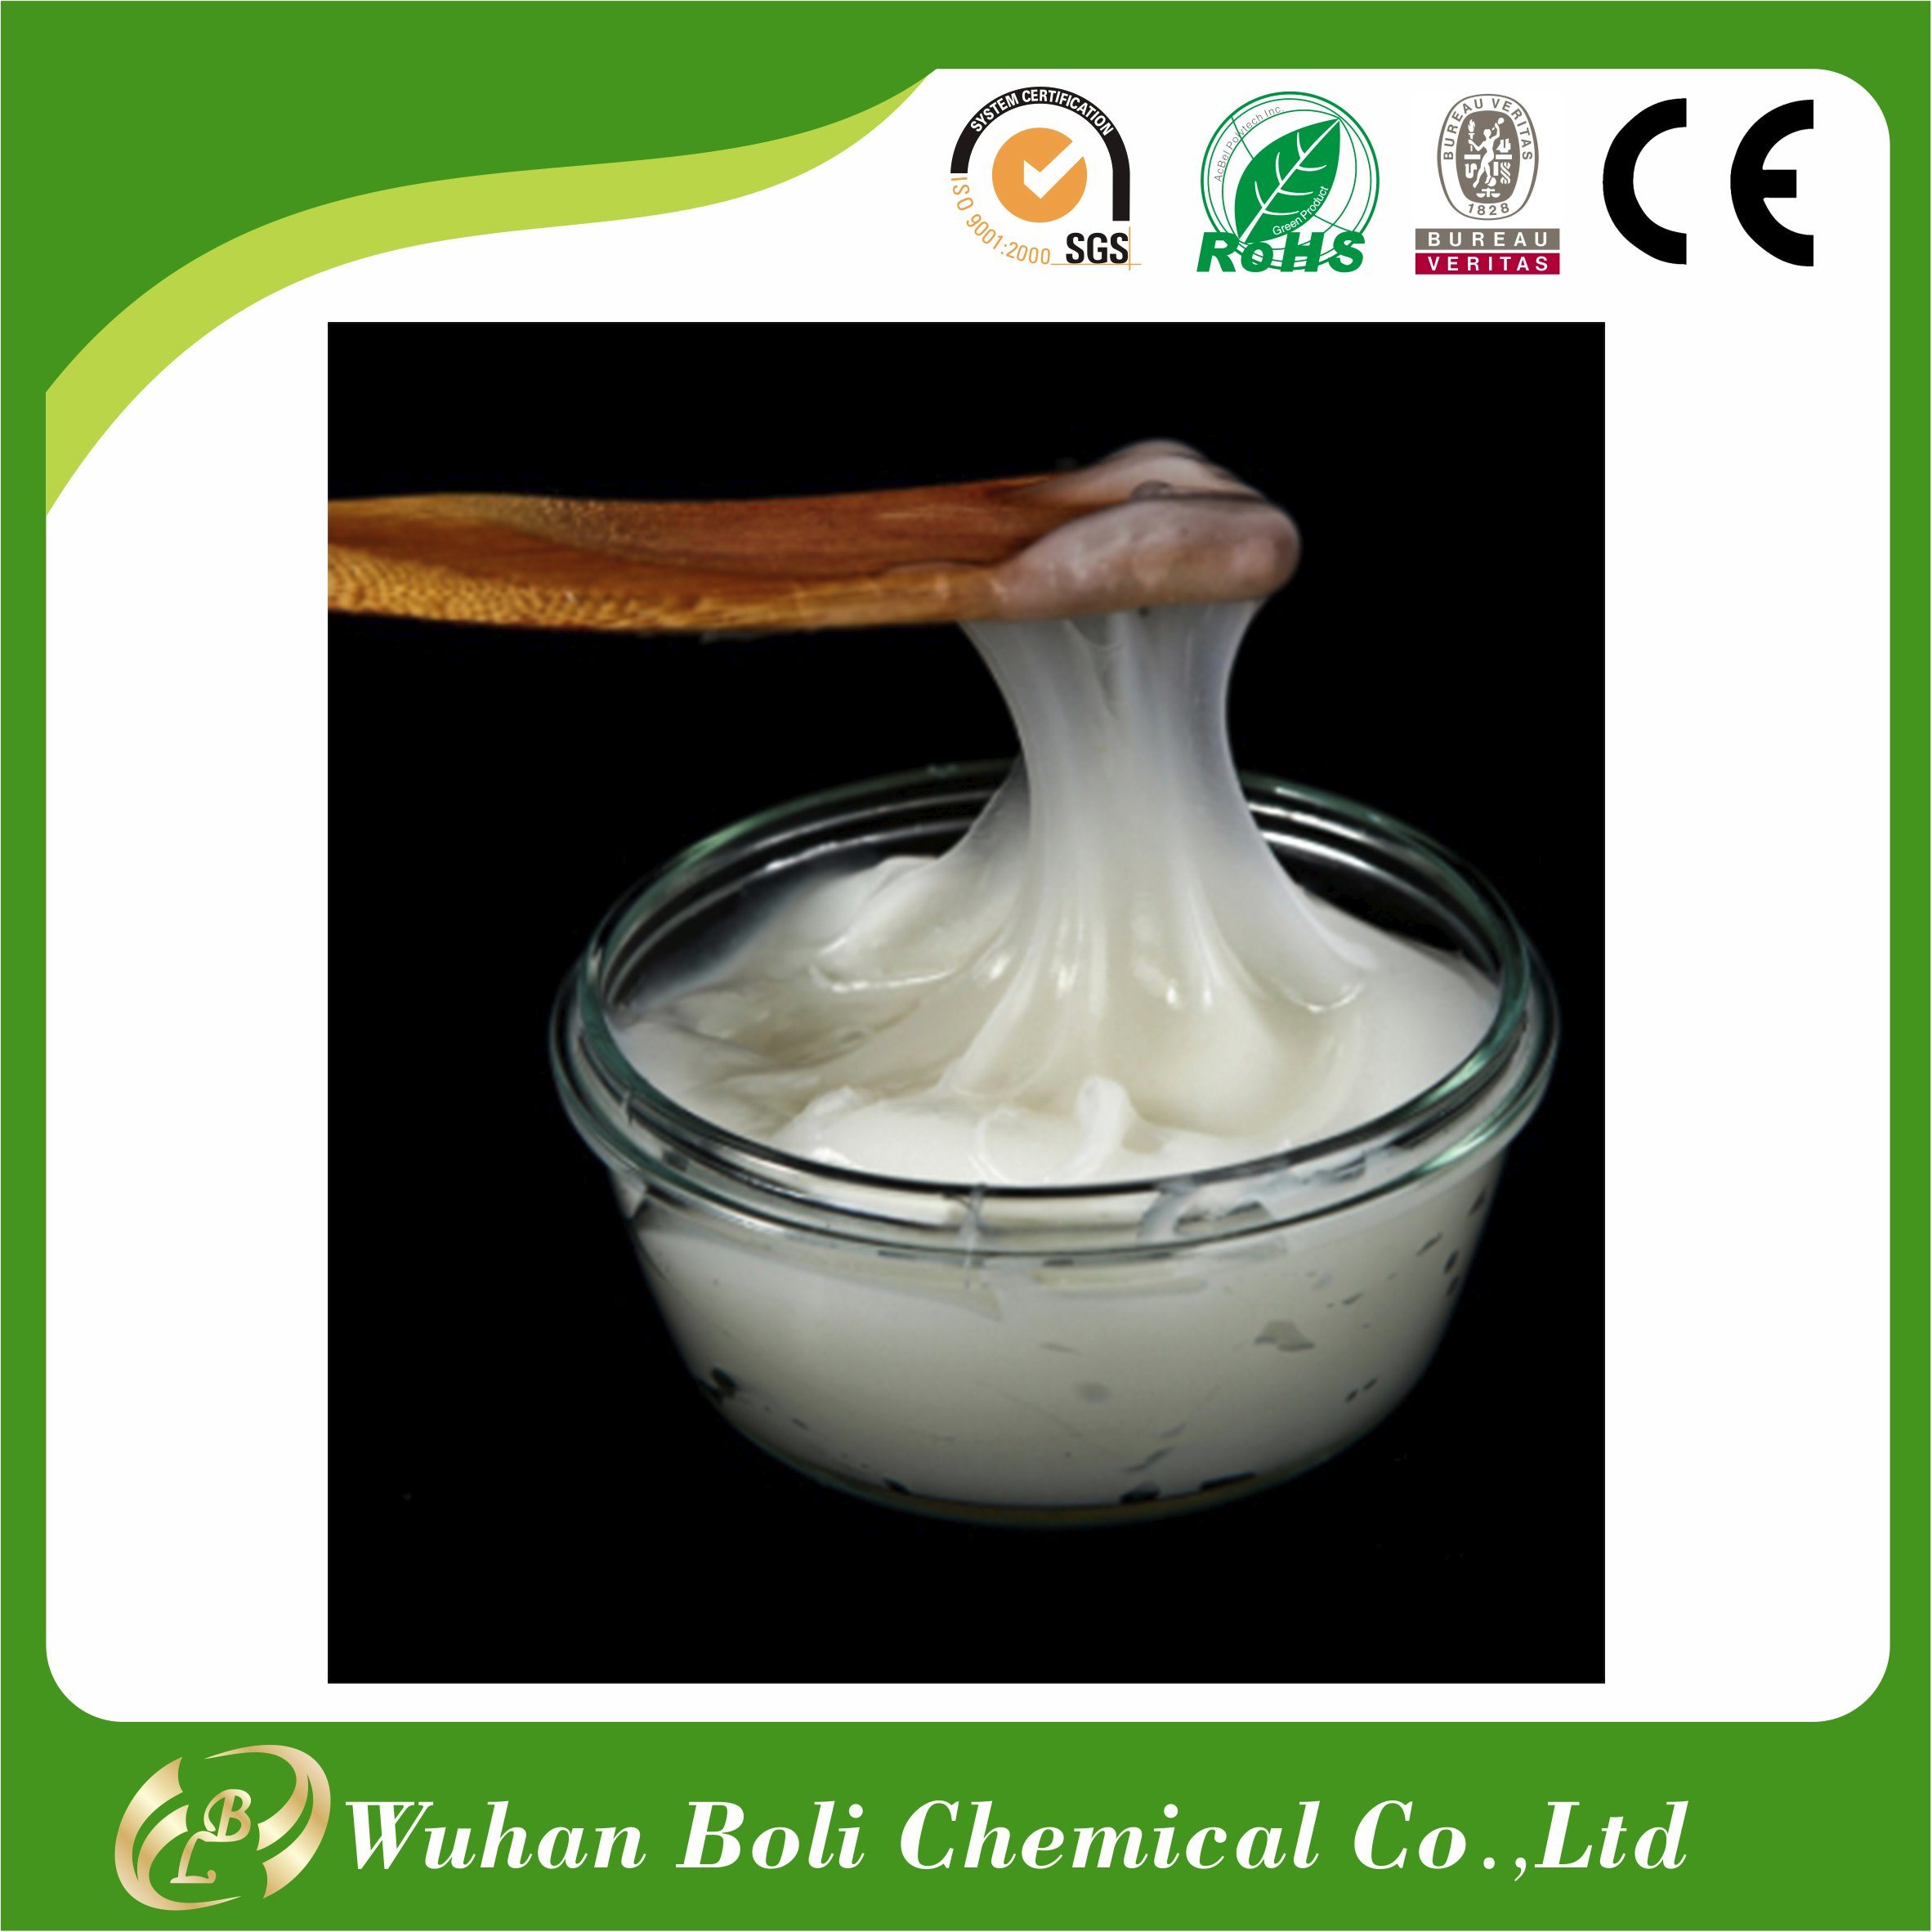 China Supplier Gbl Eco-friendly Potato Powder Wallpaper - Environmental Friendly Adhesive Construction - HD Wallpaper 